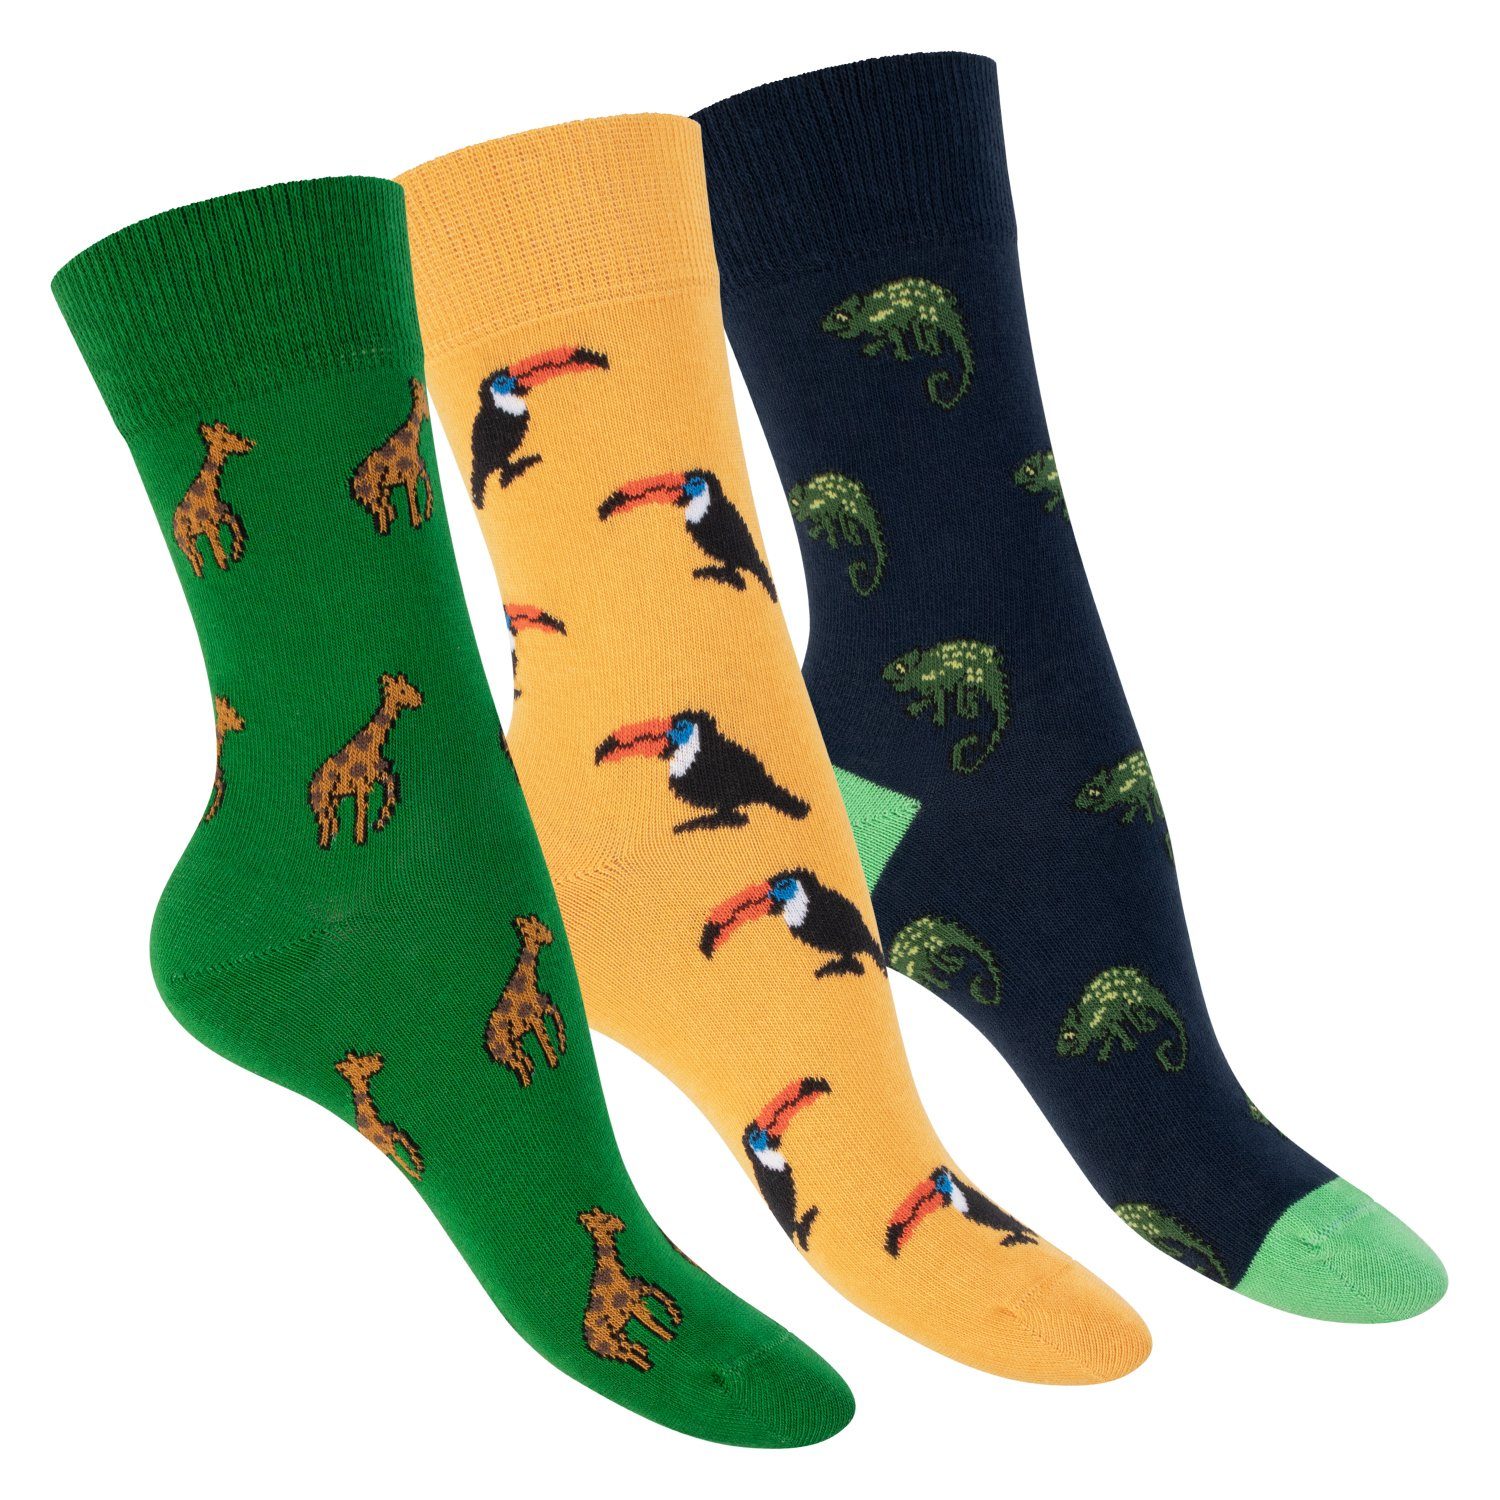 Footstar Basicsocken Damen/Herren Bunte Motiv Socken, Modische Baumwollsocken Safari